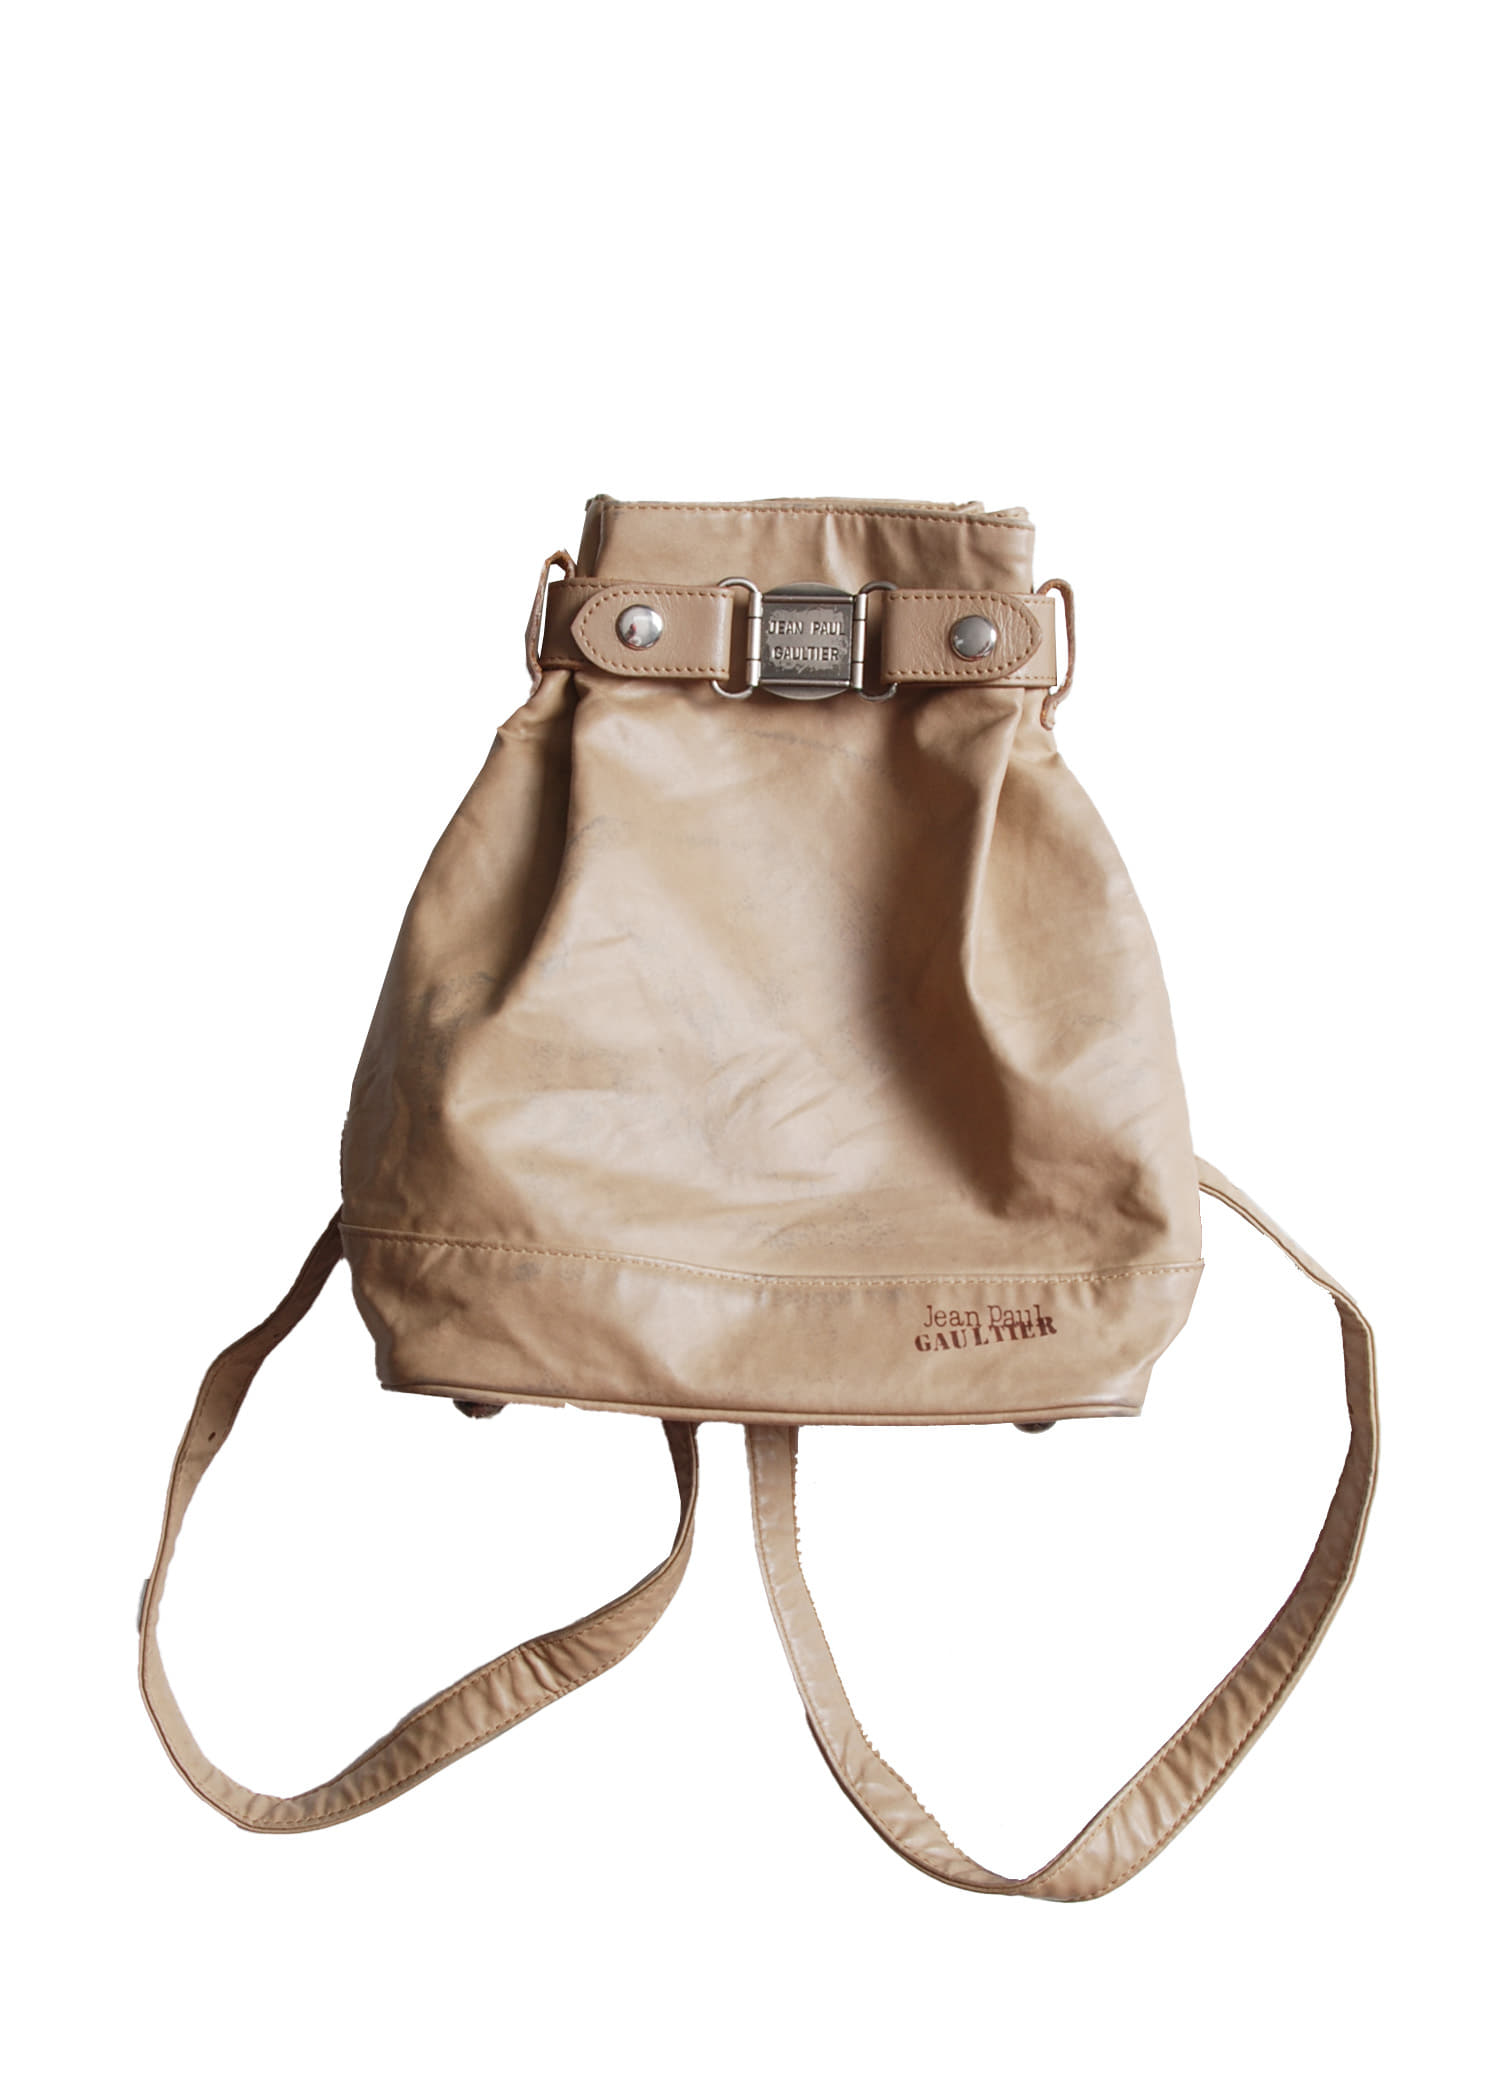 Jean Paul Gaultier small bag